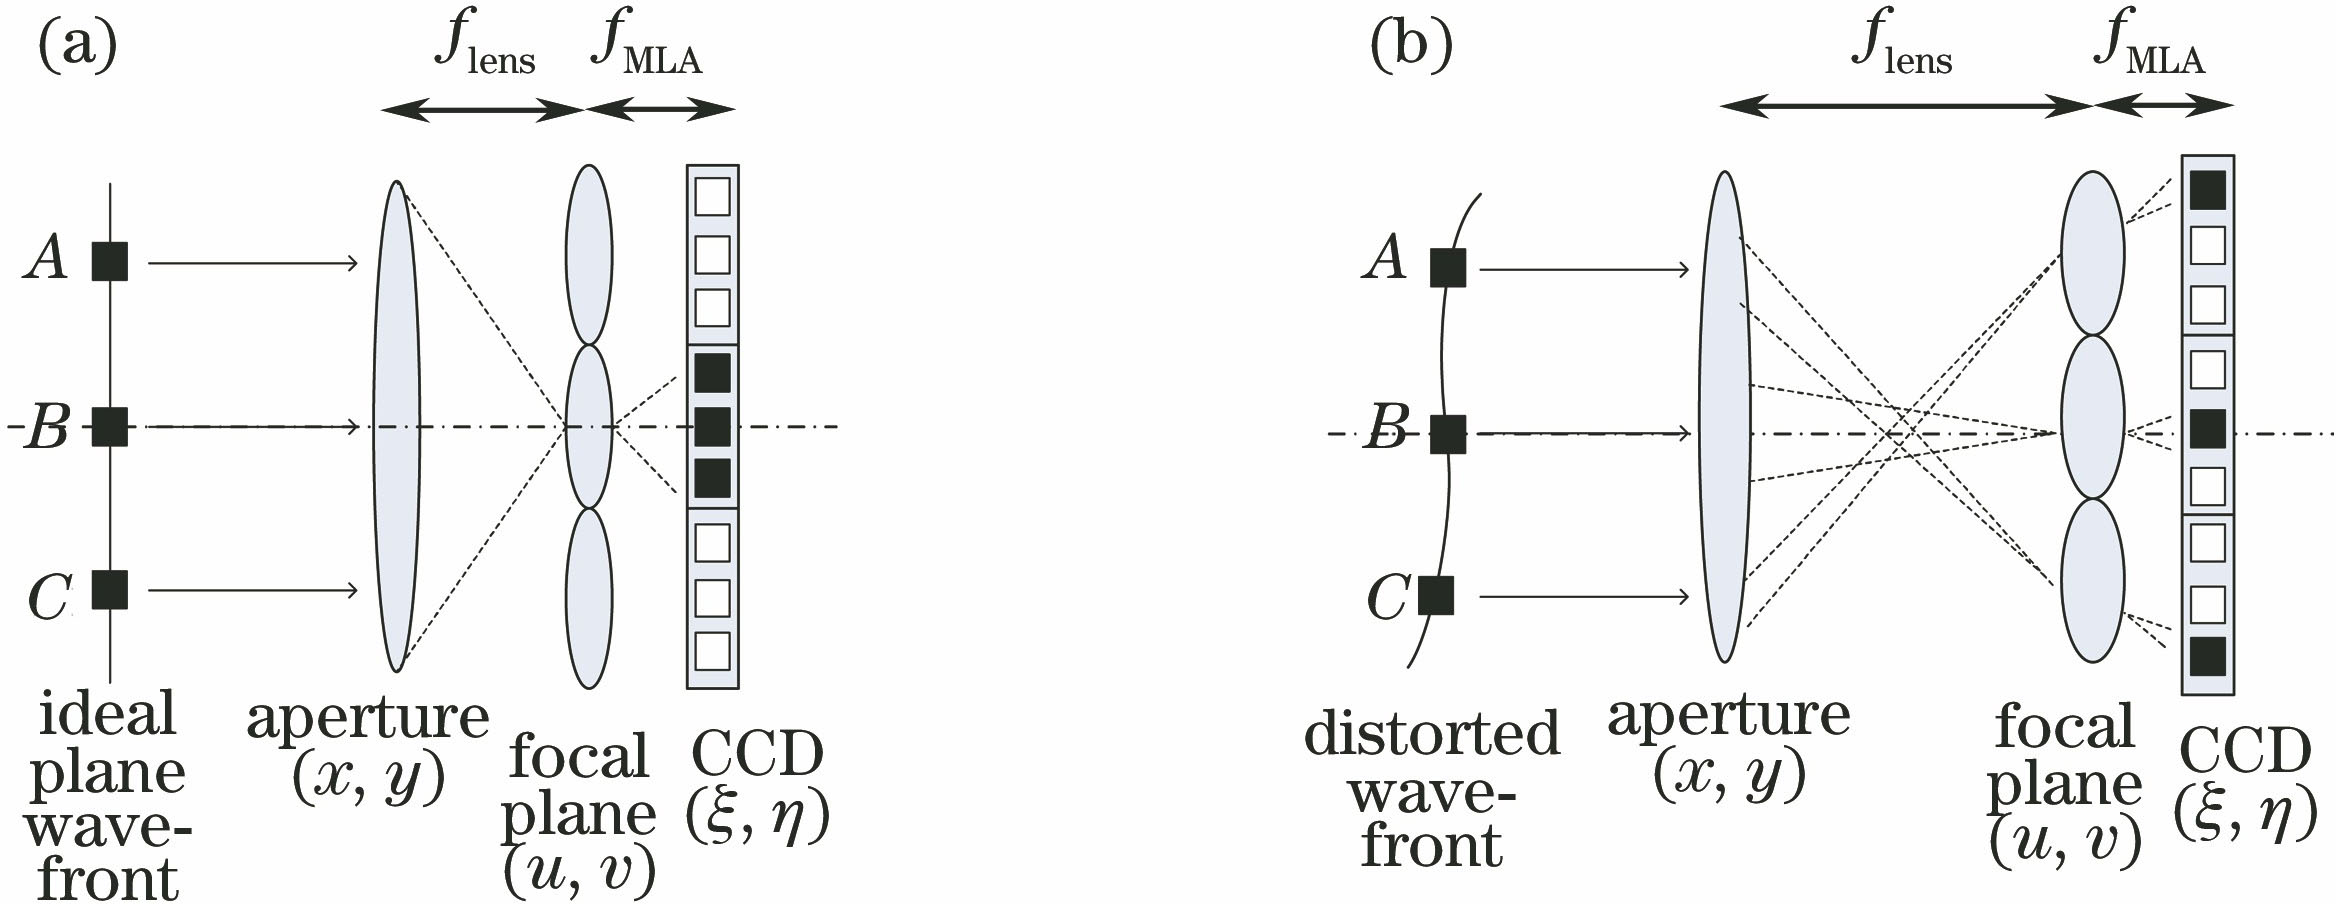 Principle diagram of wavefront detection using CAPIS structure. (a) Ideal plane wavefront ;(b)distorted wavefront